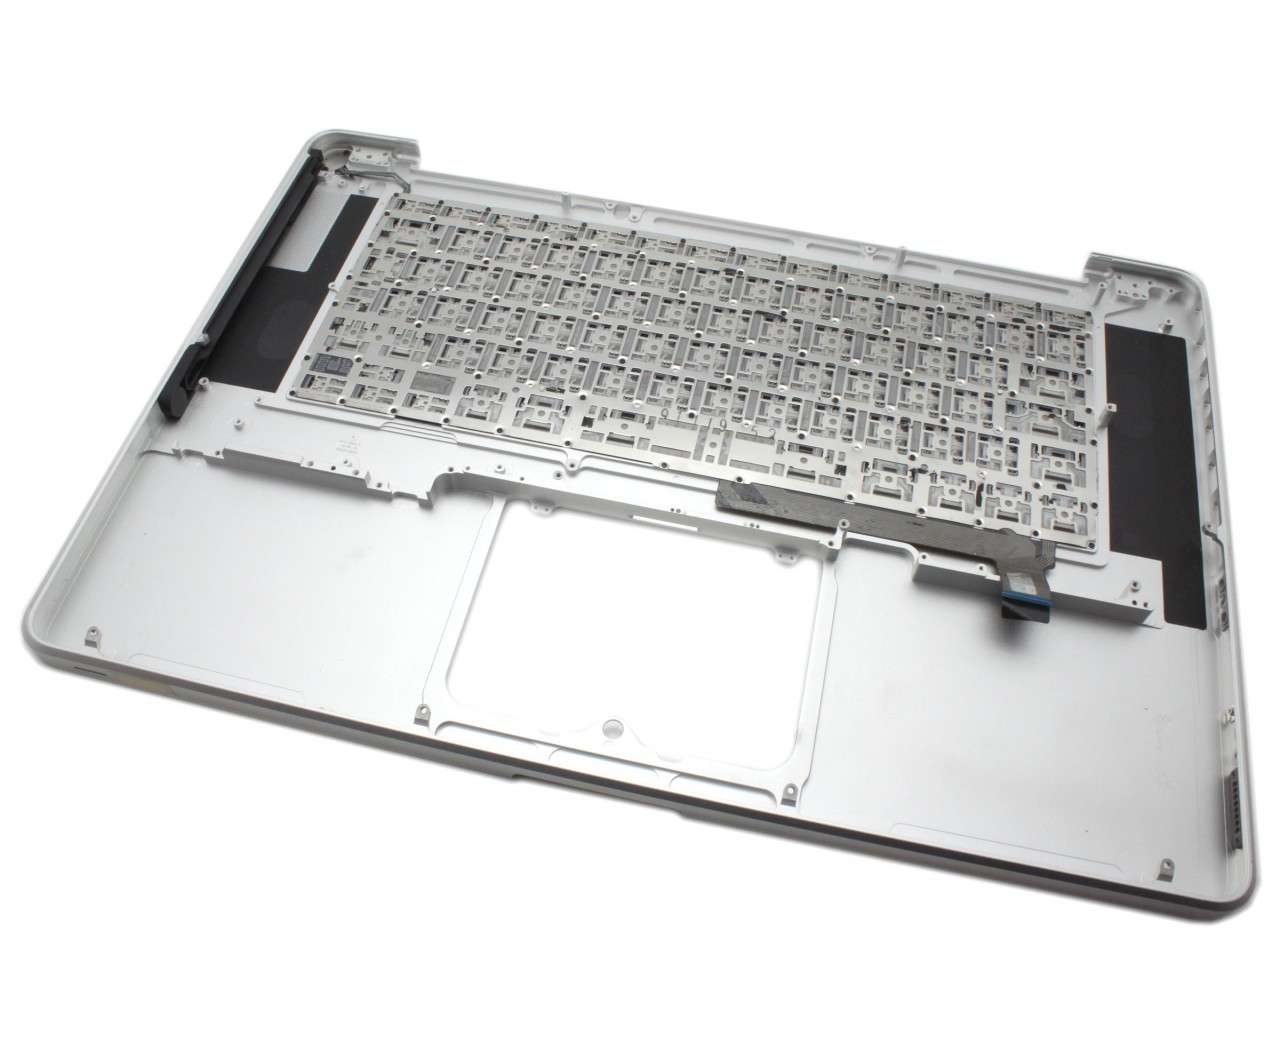 Tastatura Apple MacBook Pro 15 MC118LL A Neagra cu Palmrest Argintiu Refurbished Apple Apple